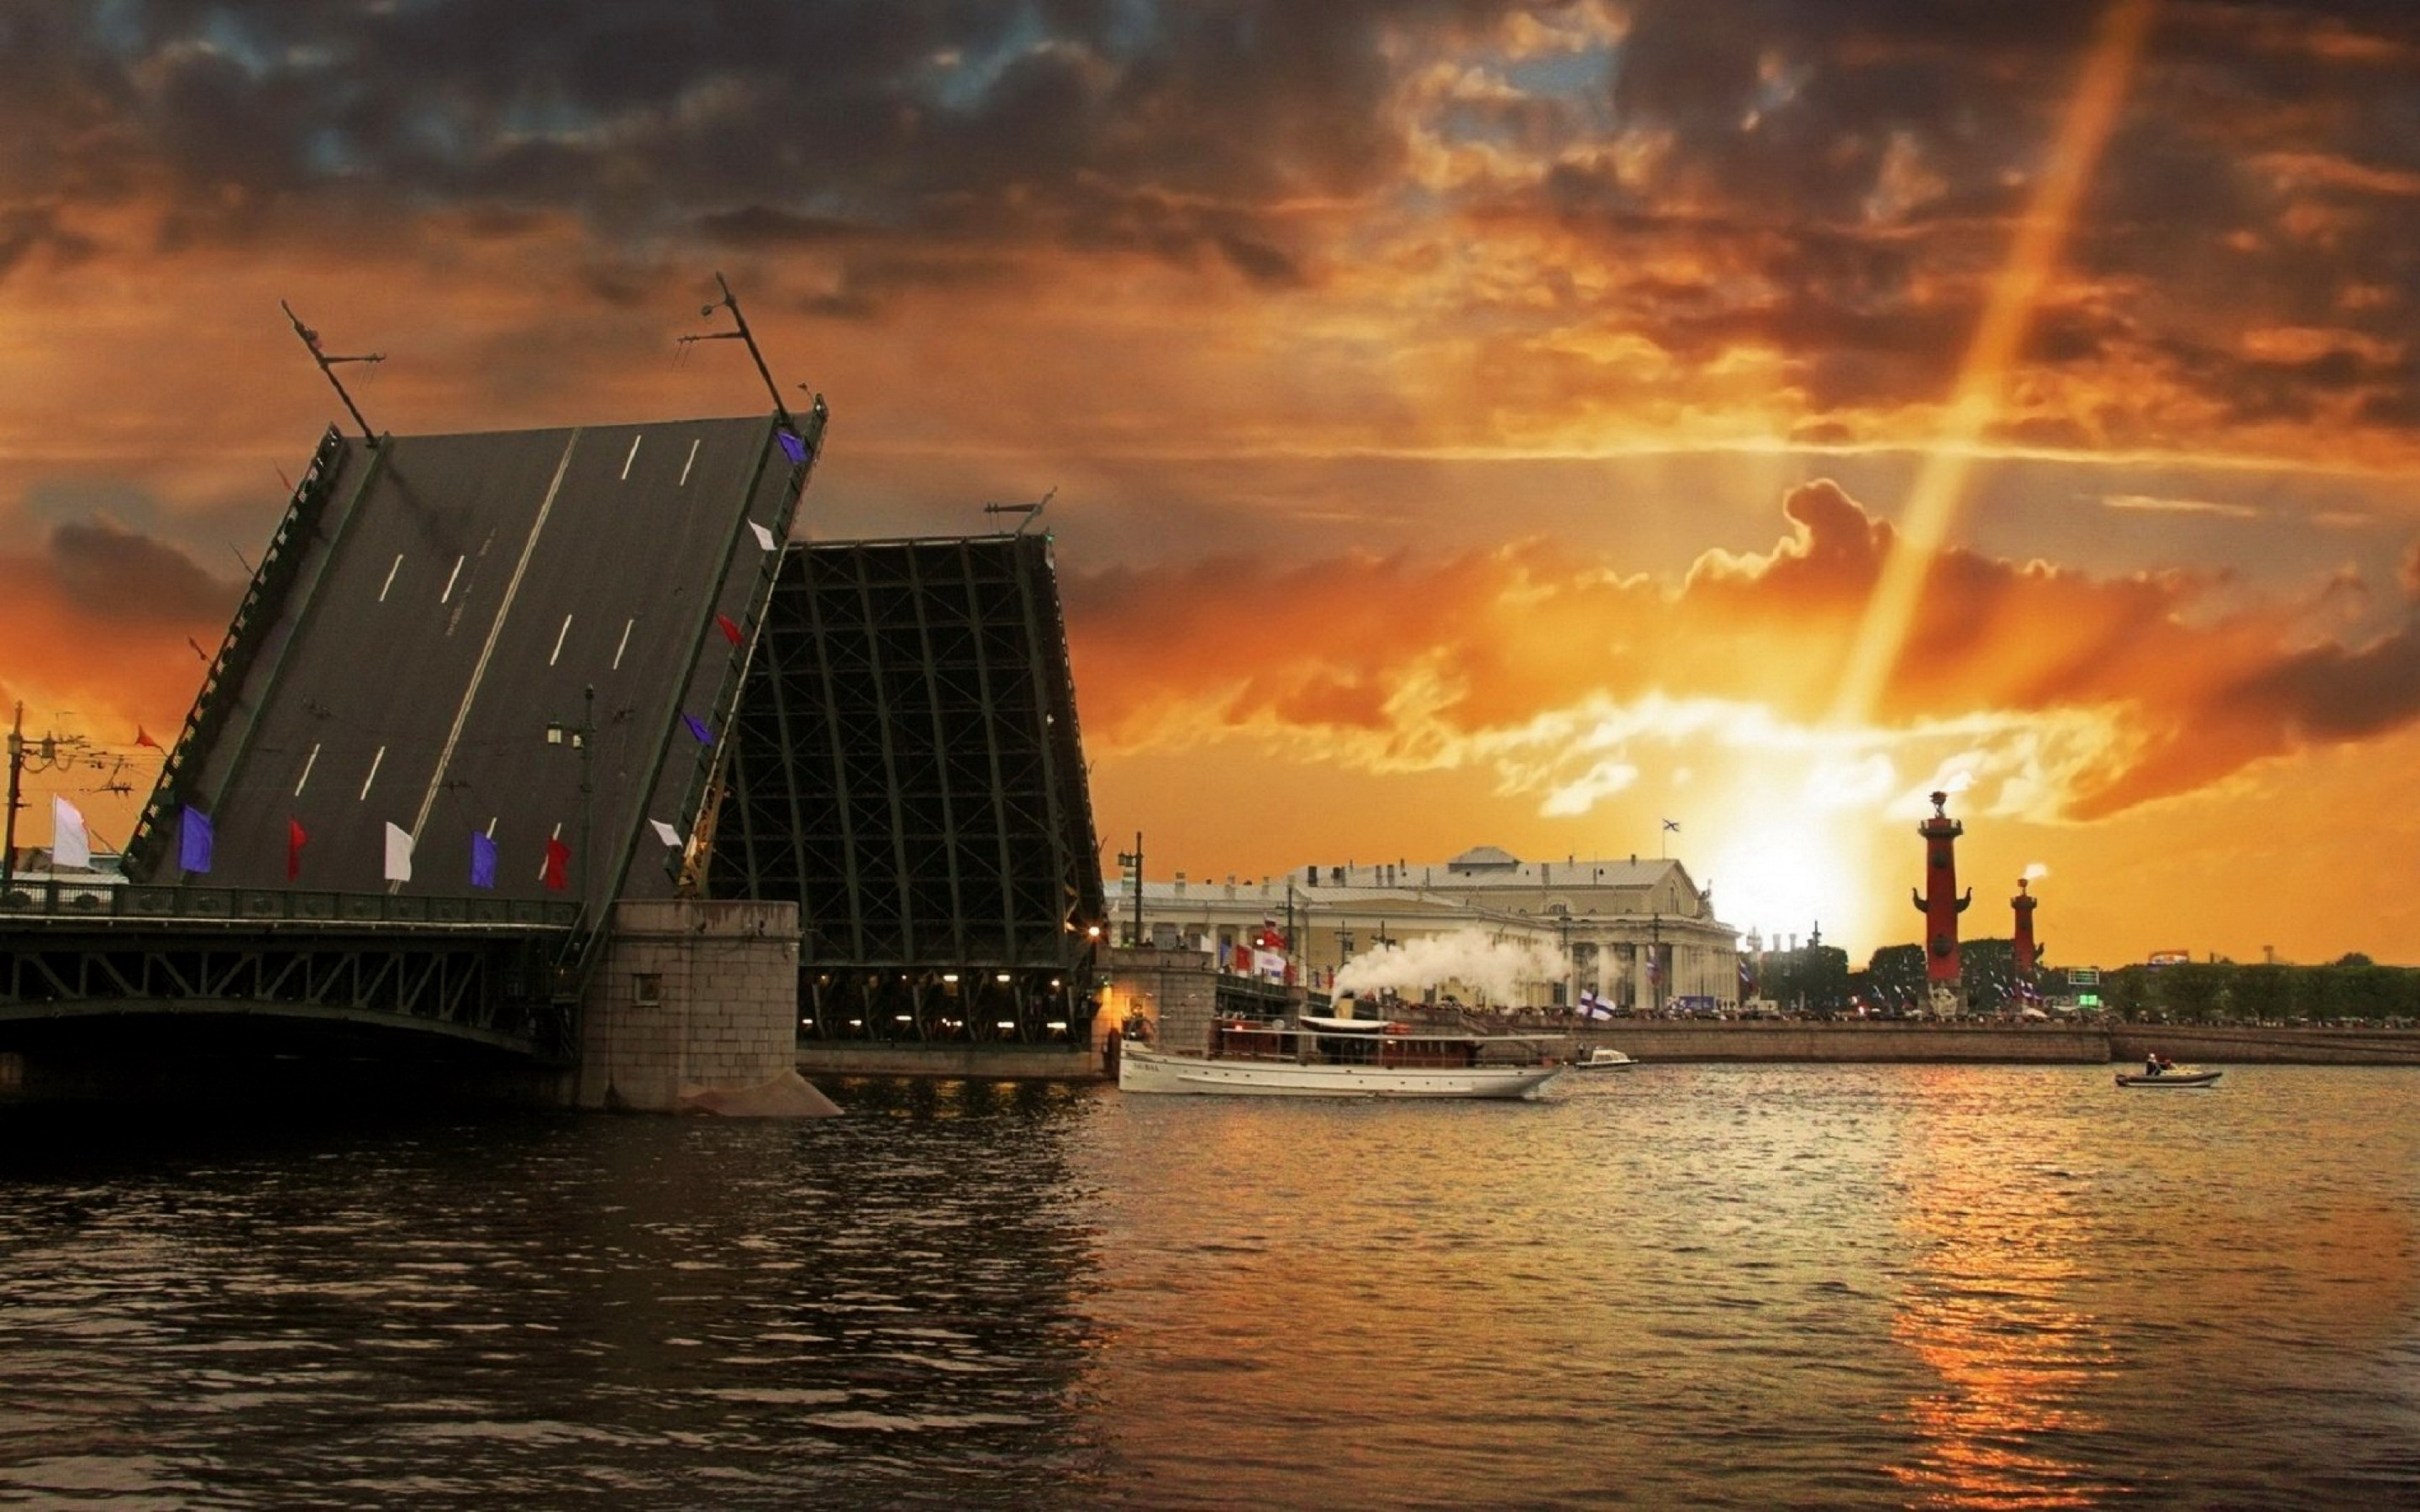 Saint Petersburg 4k Ultra HD Wallpaper Background Image